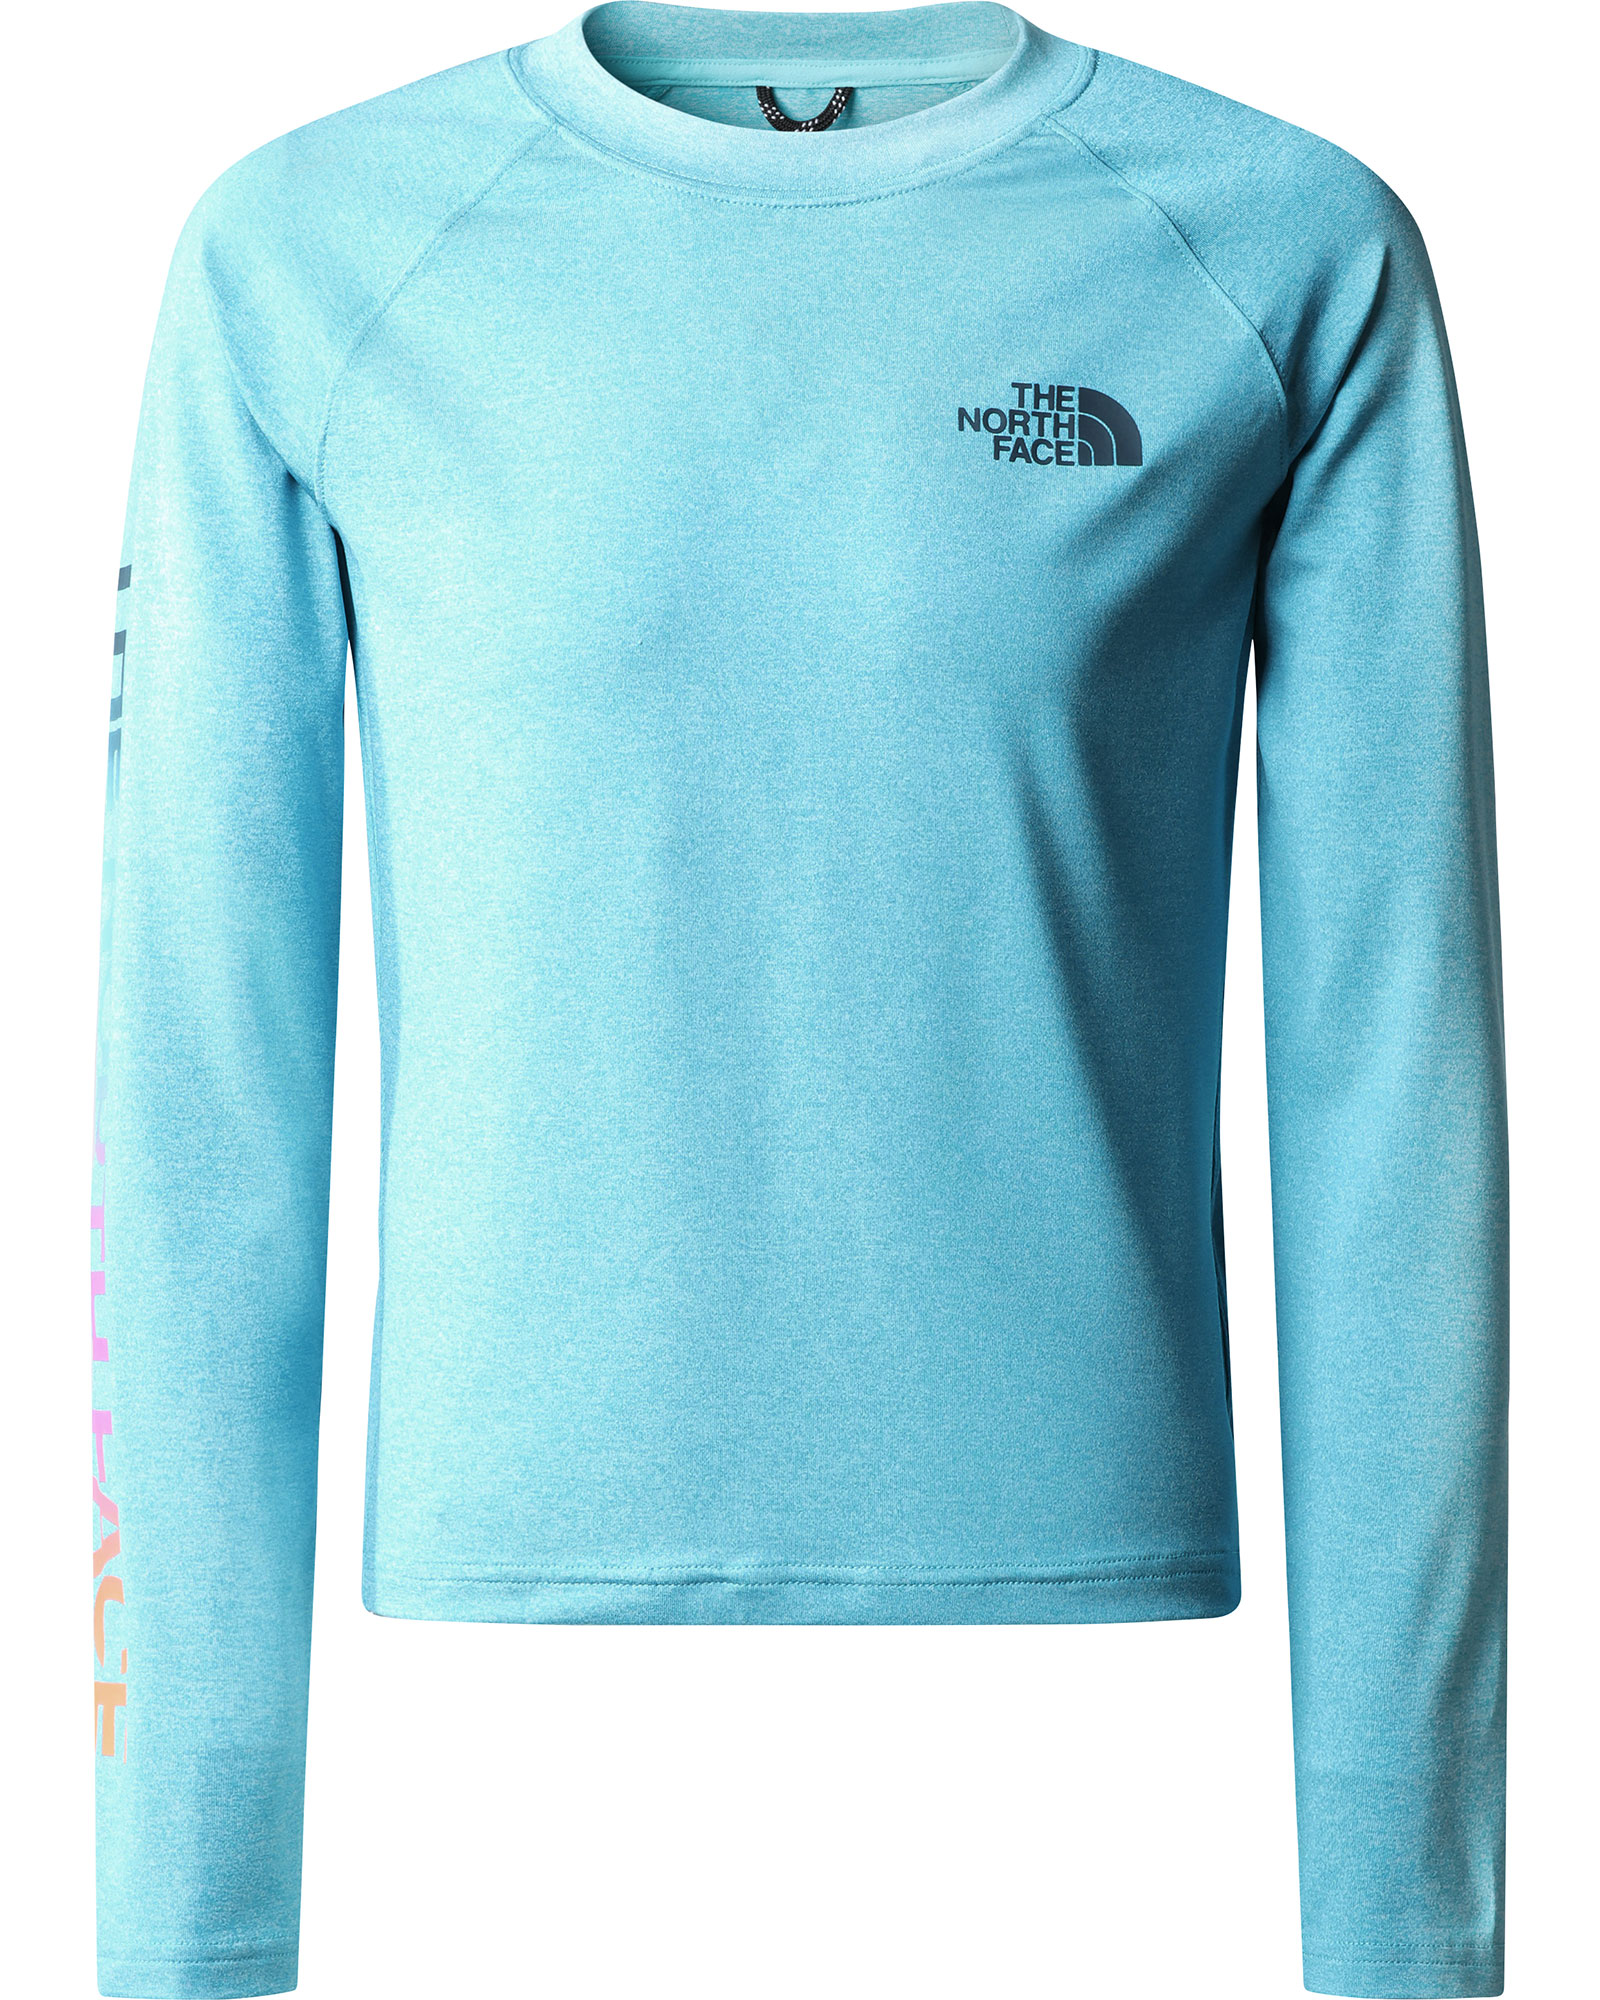 The North Face Girl’s Amphibious Long Sleeved Sun T Shirt - Scuba Blue L